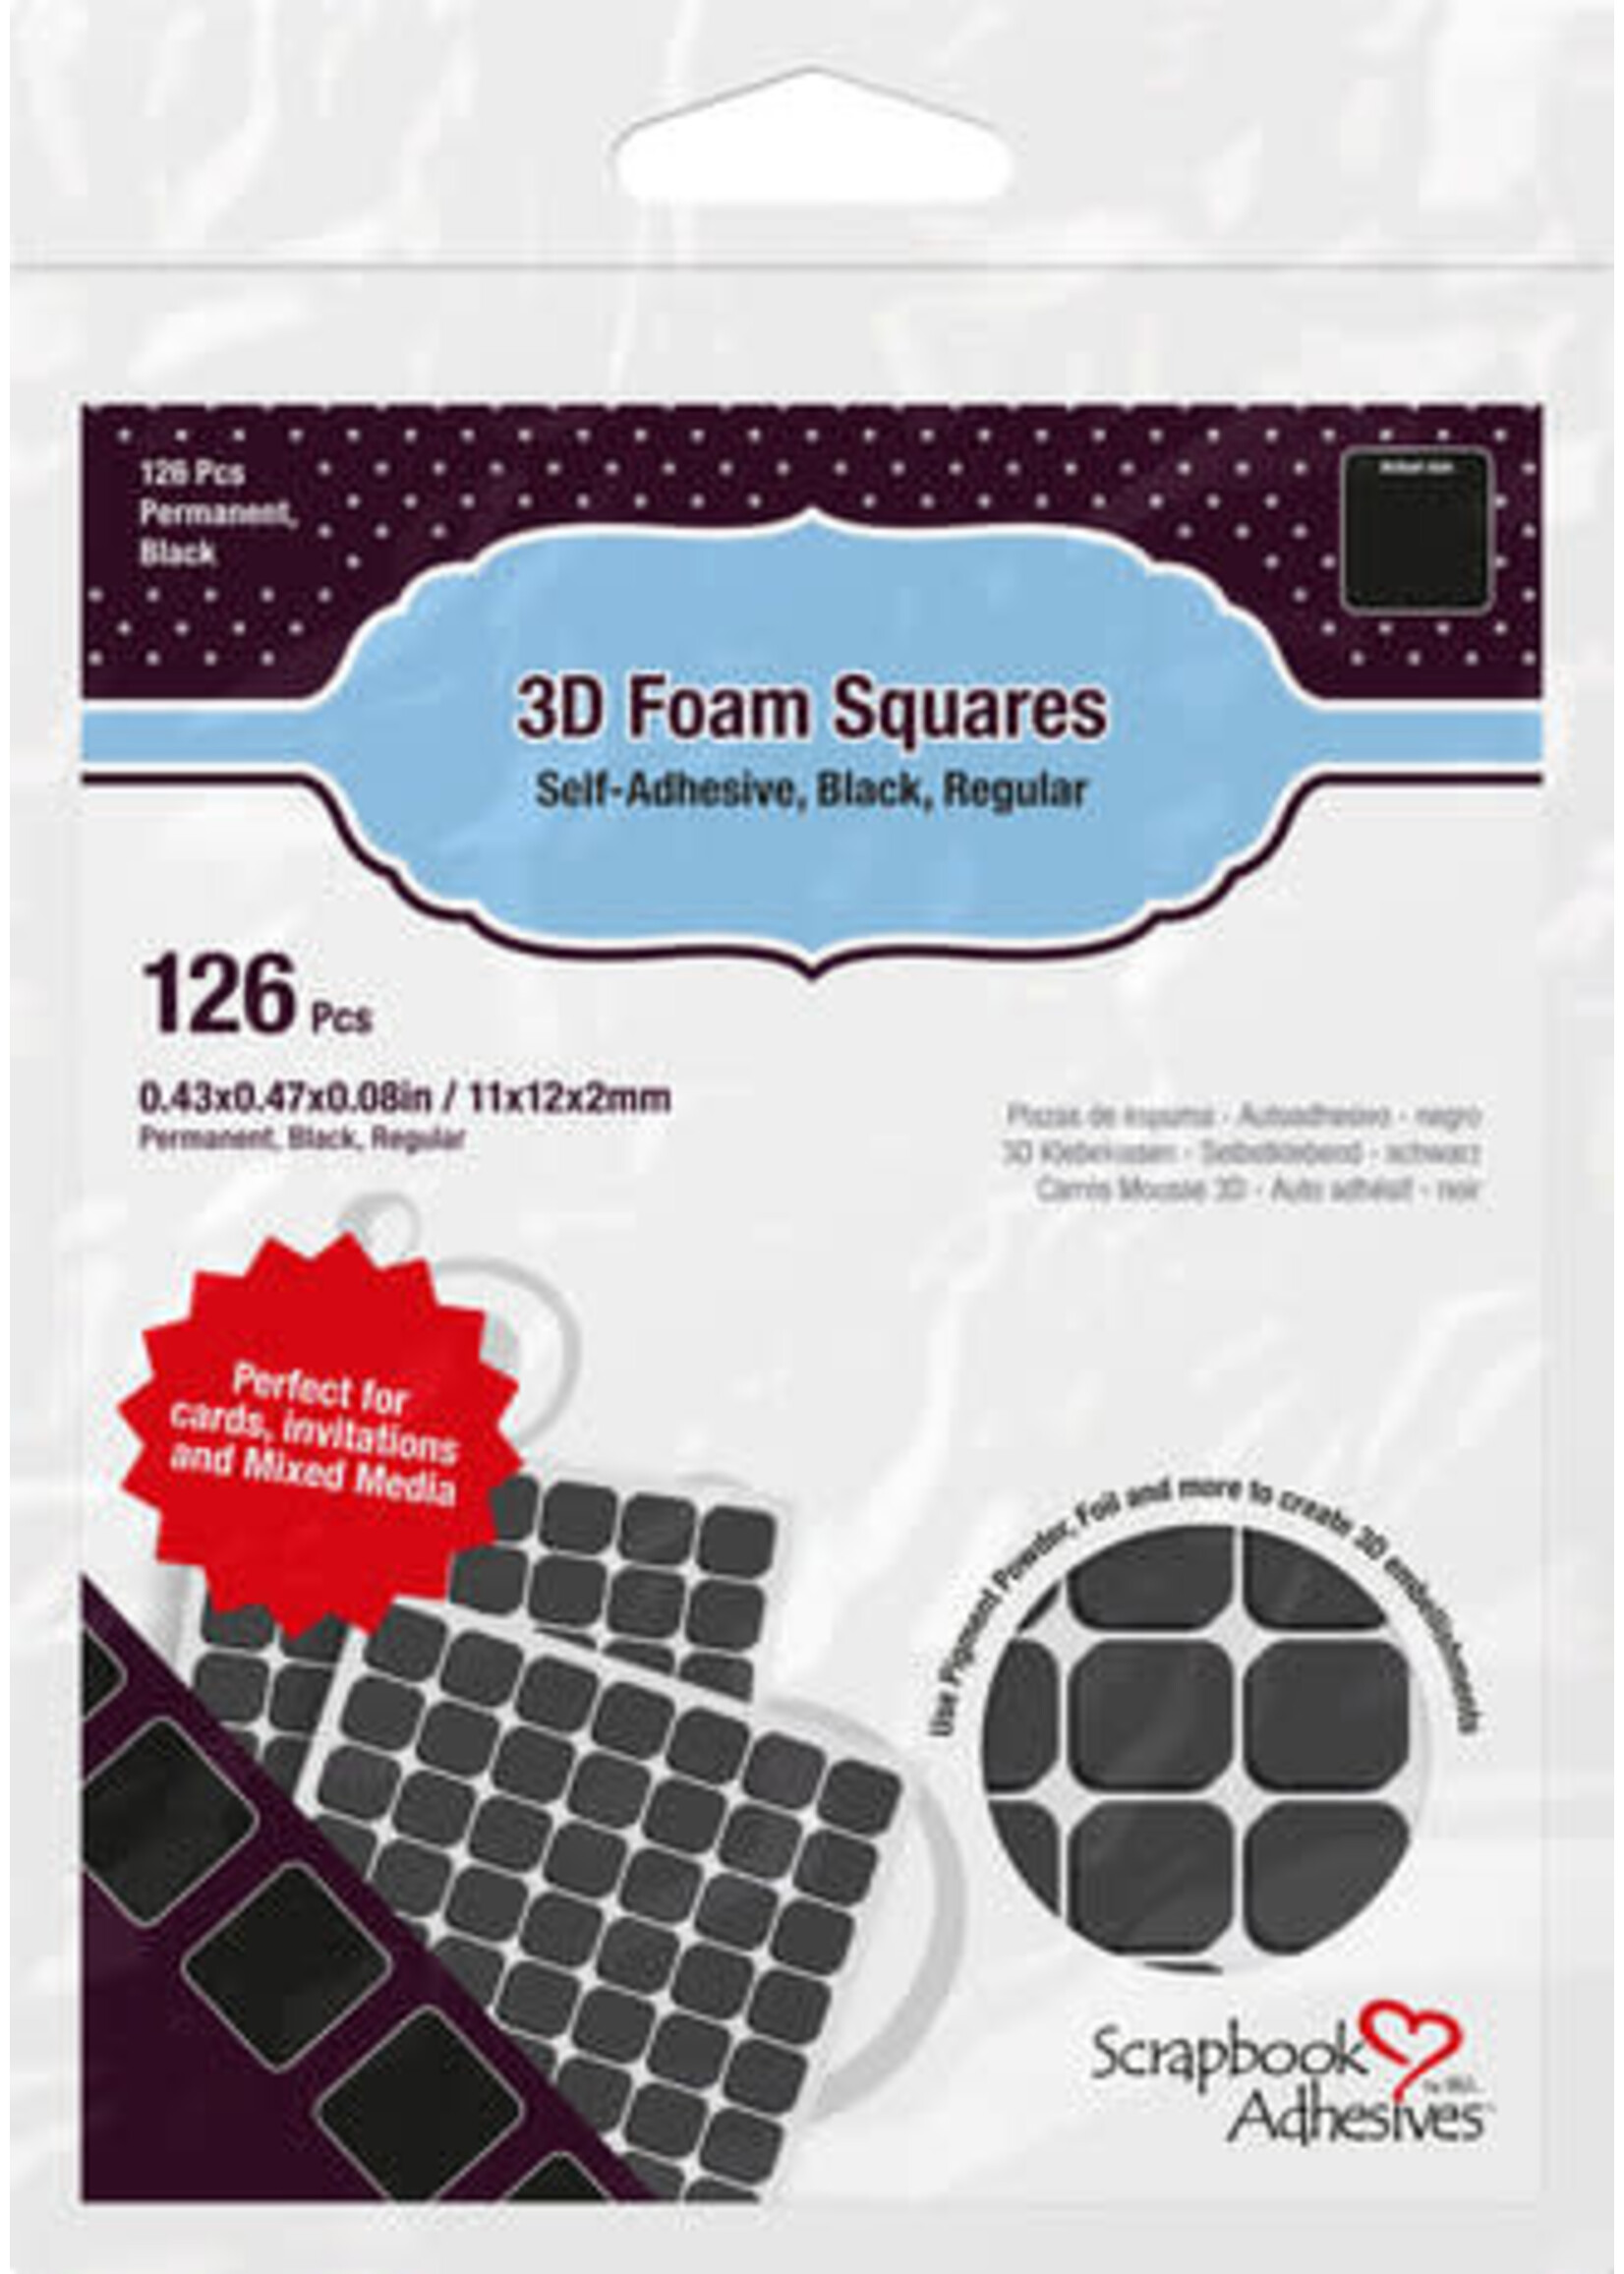 Scrapbook Adhesives 3D Foam Squares Black Regular (126pcs) (01611)